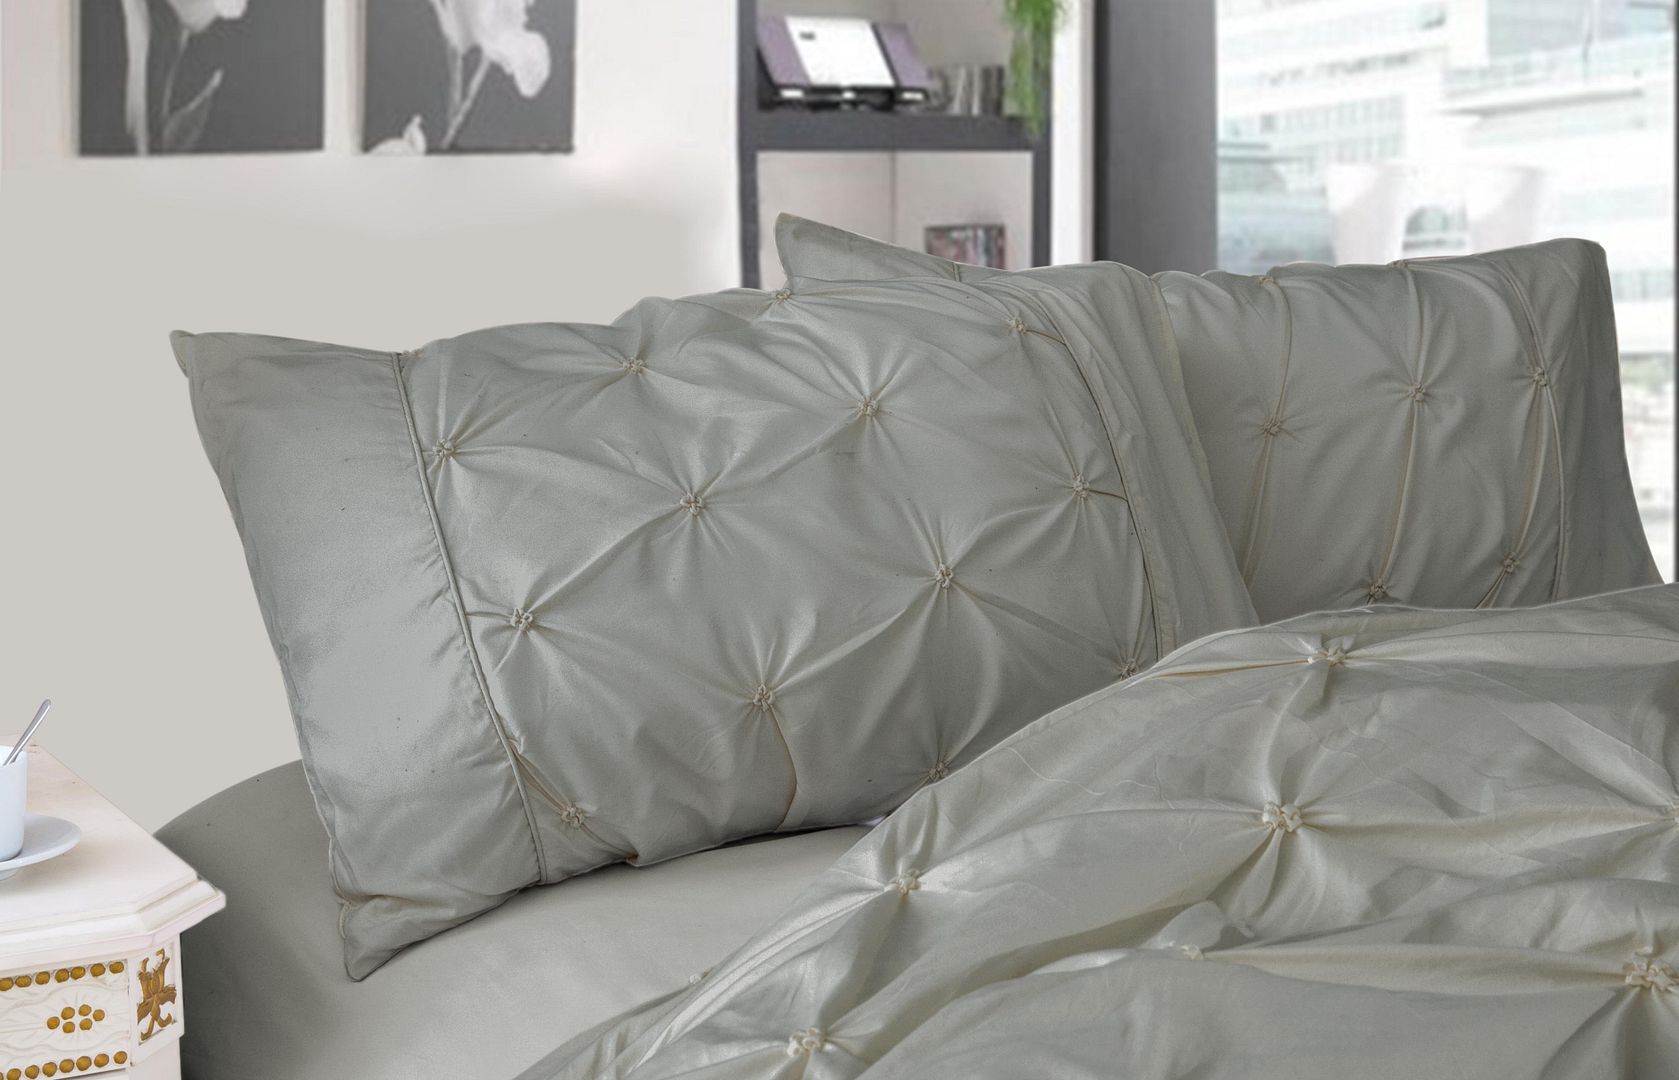 Diamond Pintuck Premium Ultra Soft King size Pillowcases 2-Pack - Grey